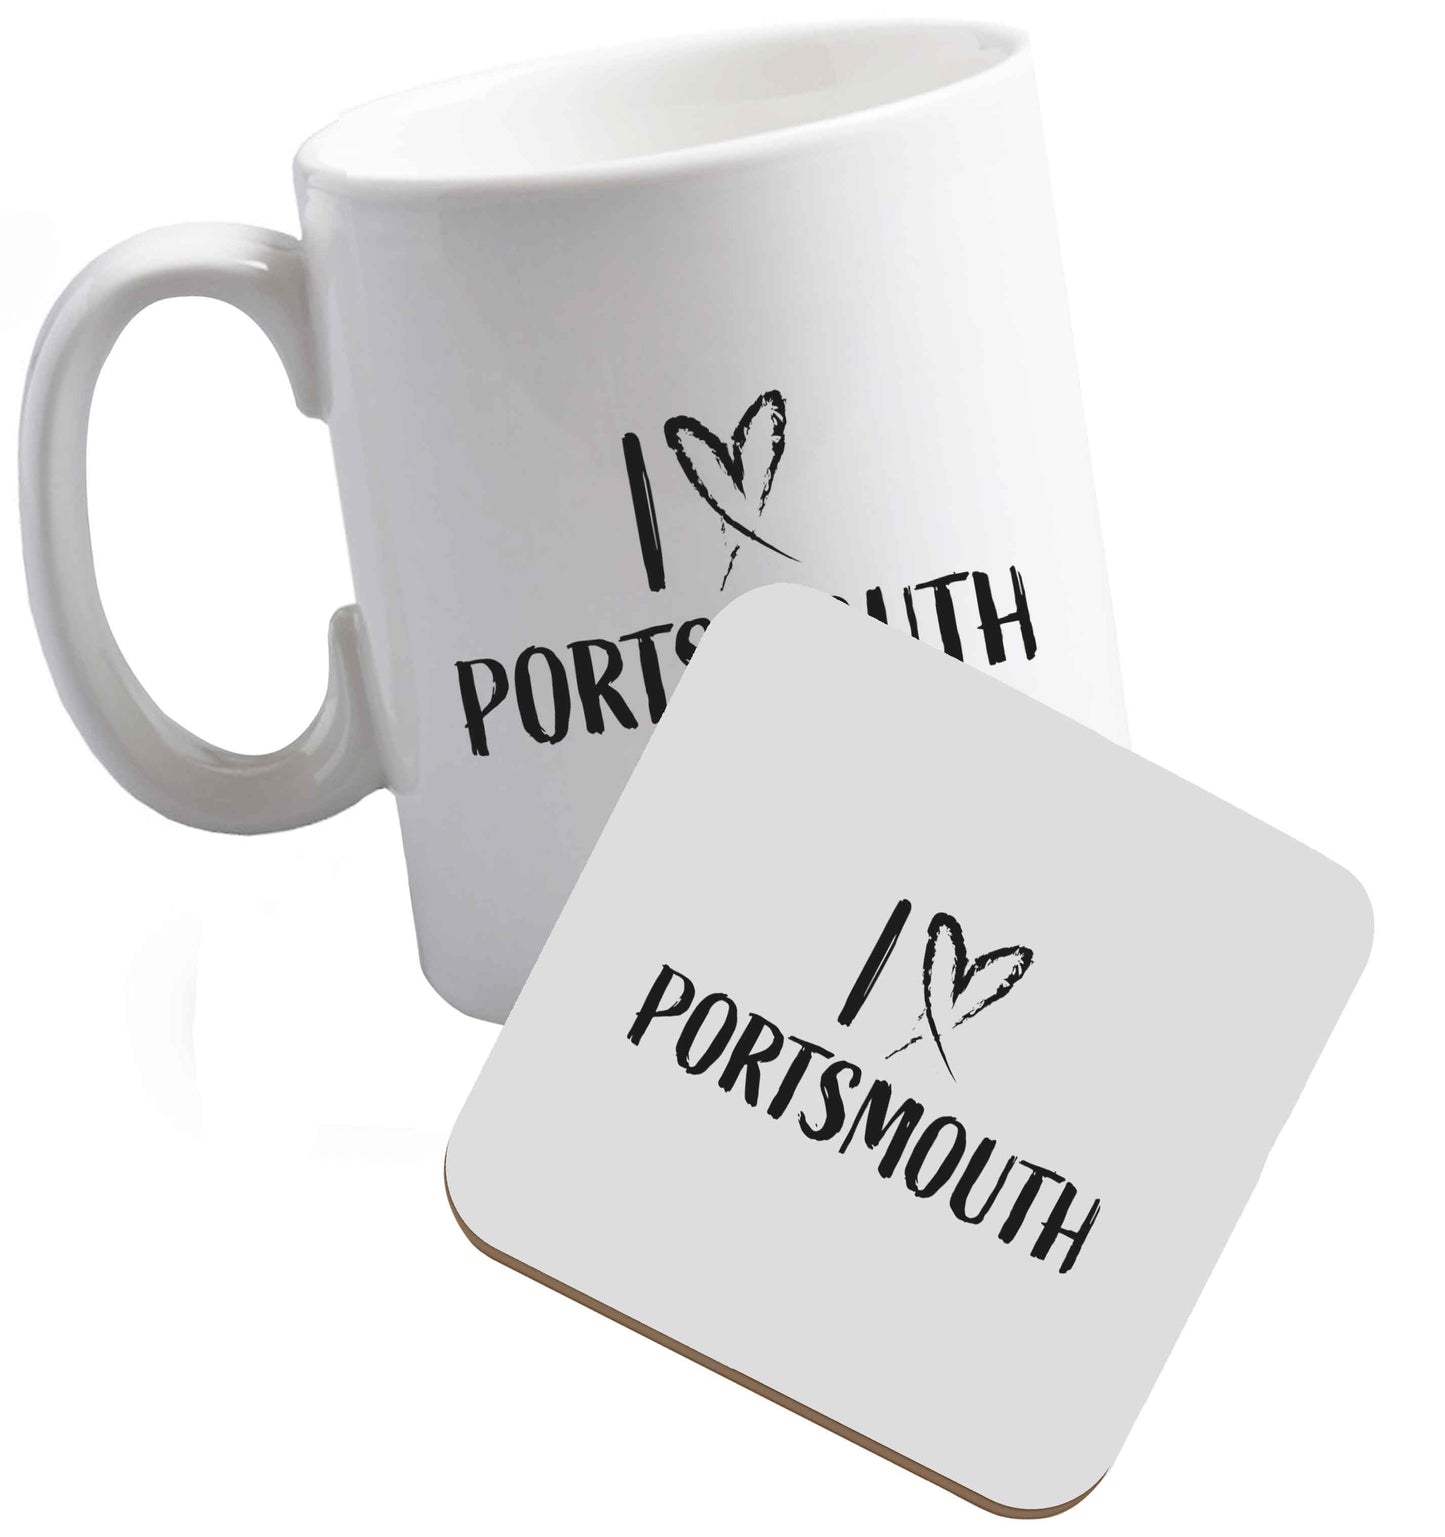 10 oz I love Portsmouth ceramic mug and coaster set right handed